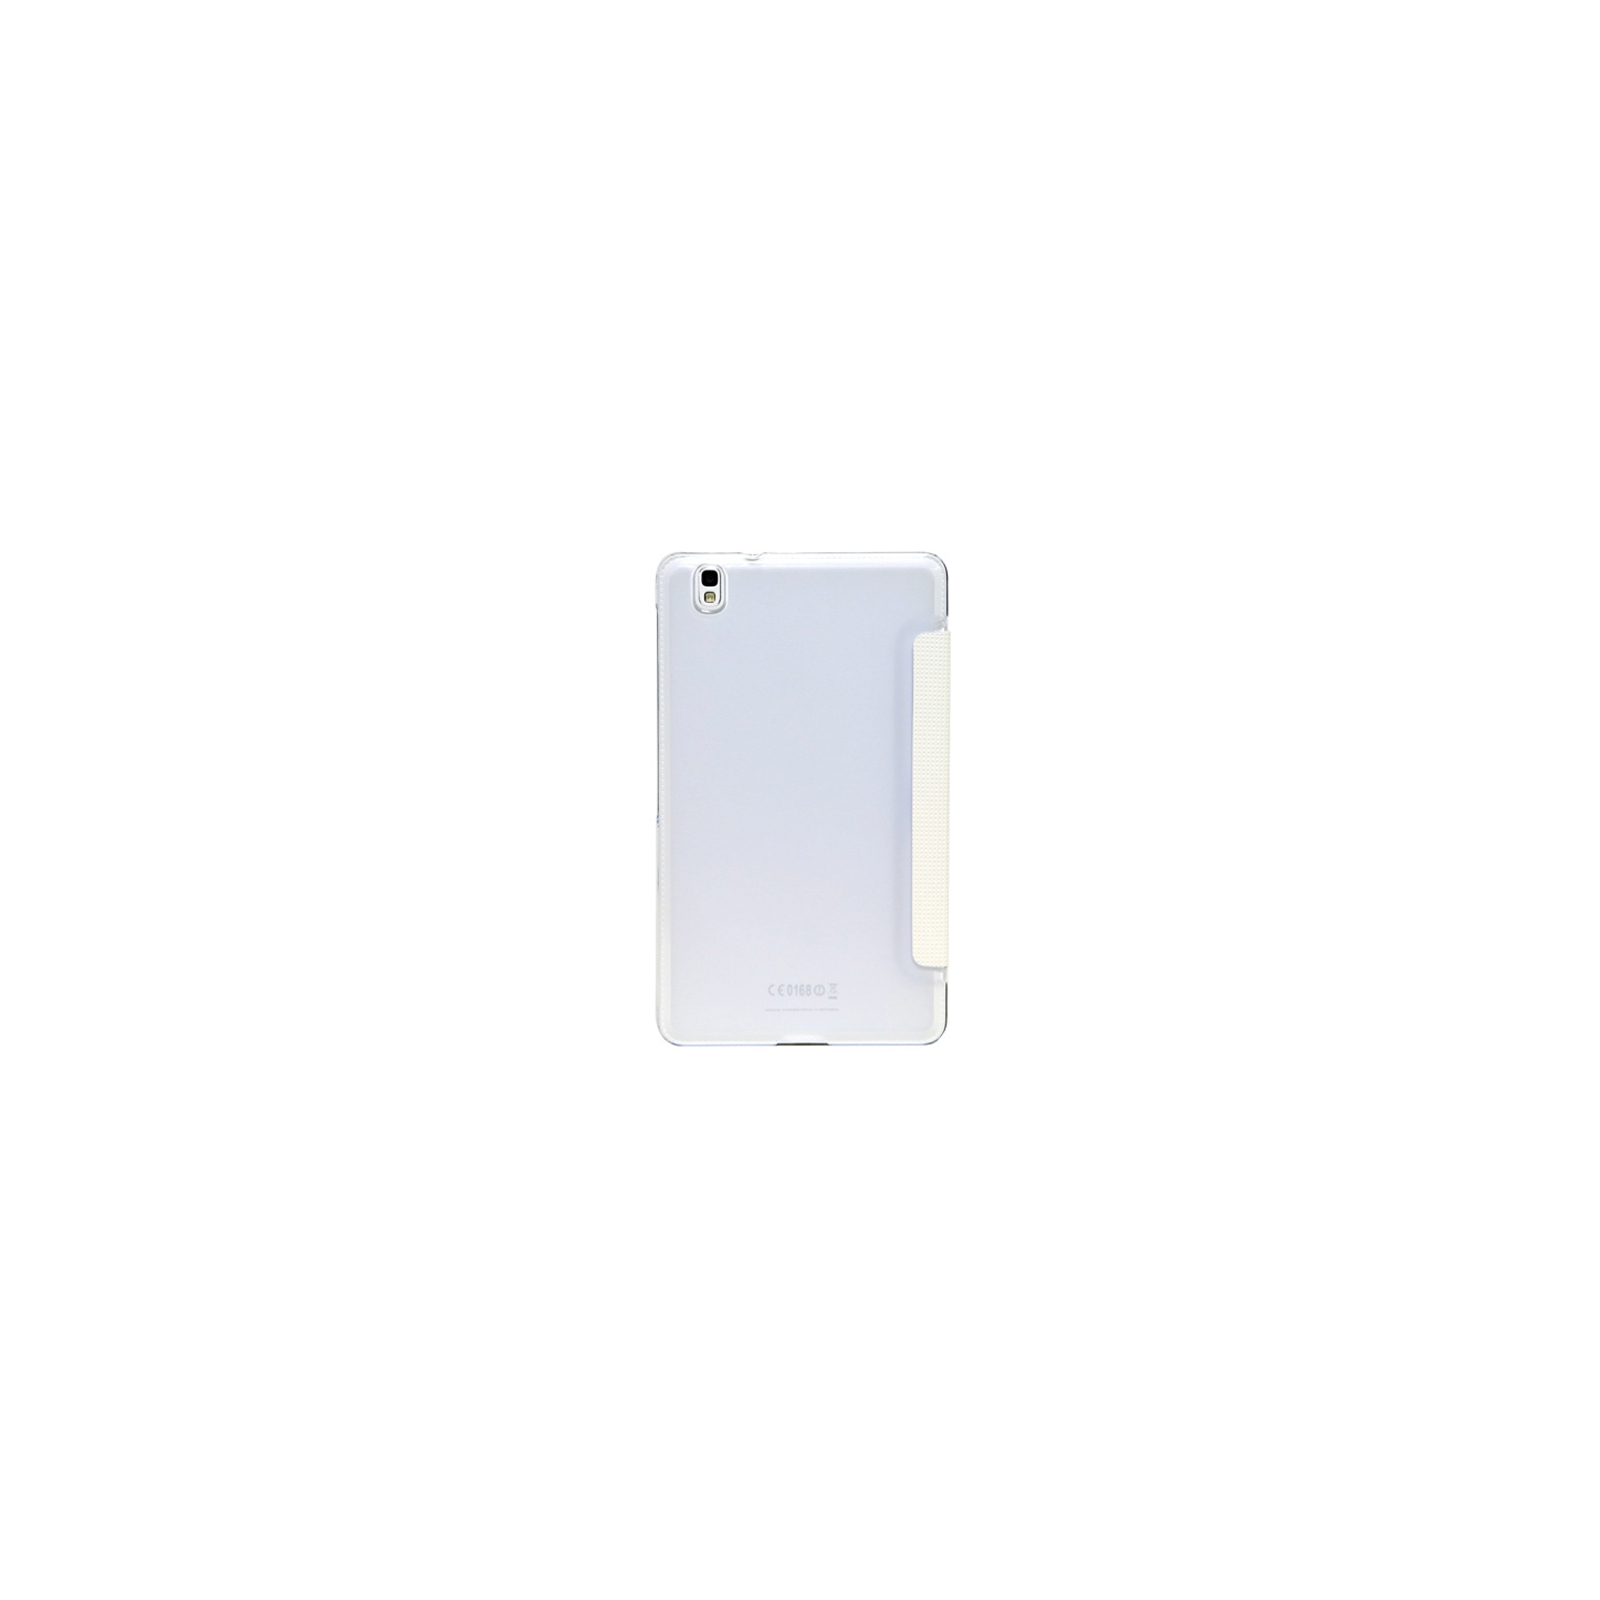 Чехол для планшета Rock Samsung Galaxy Tab Pro 8.4 New elegant series white (Tab Pro 8.4-62898) изображение 2